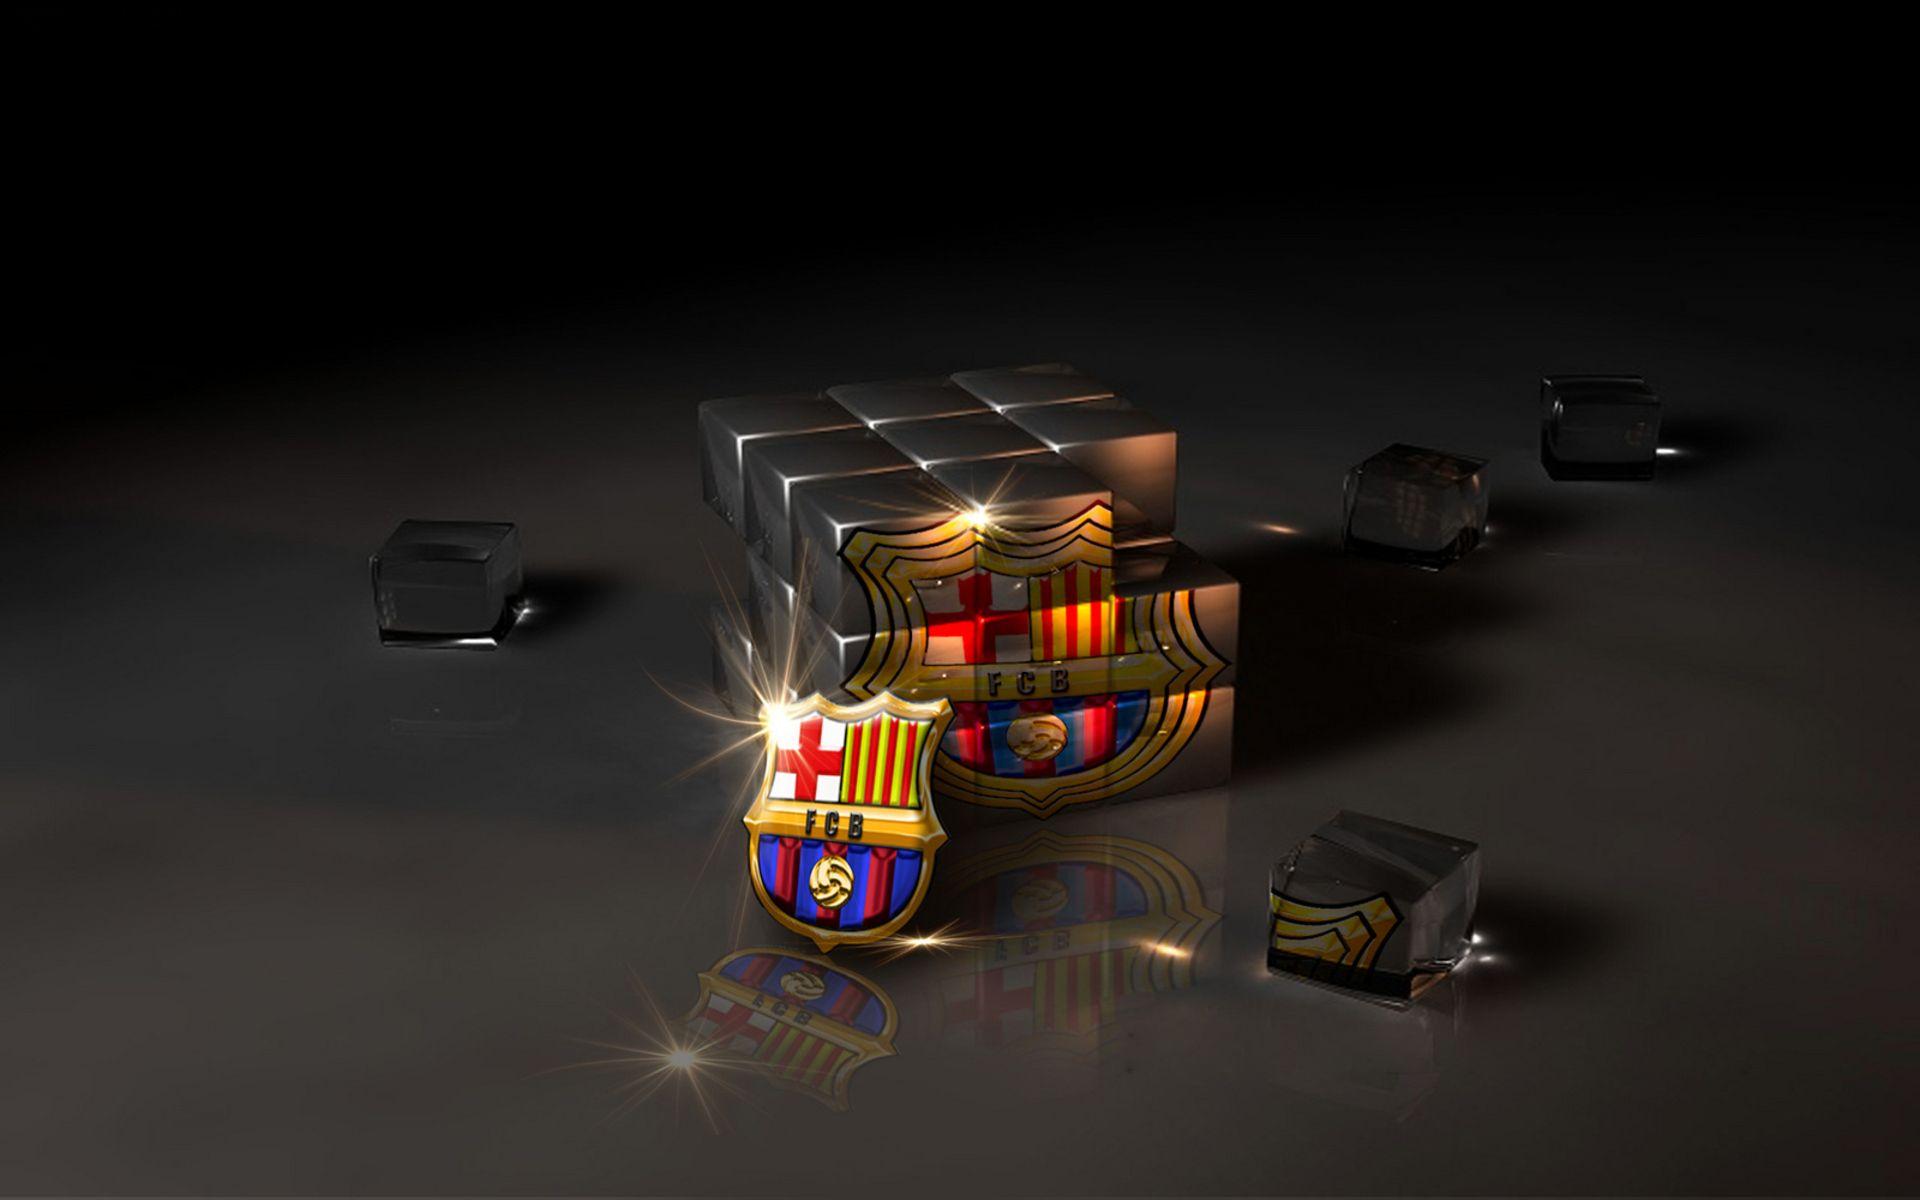 FC Barcelona Logo Wallpaper Download